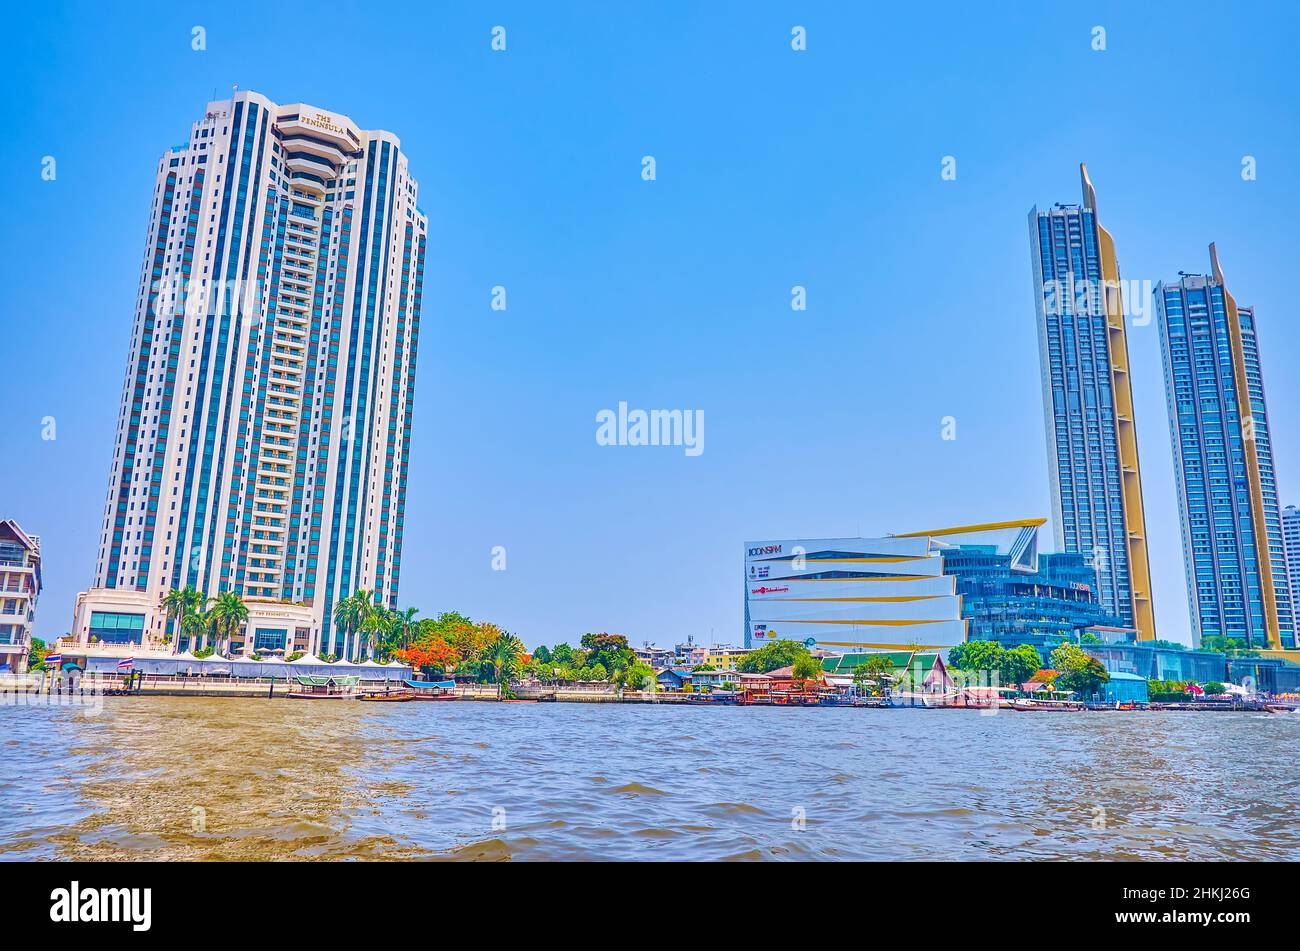 BANGKOK, THAILAND - 12. MAI 2019: Das moderne Hochhaus und die hige Shopping Mall Ikone Siam am Ufer des Chao Phraya Flusses, am 12. Mai in Bangkok, Thaila Stockfoto